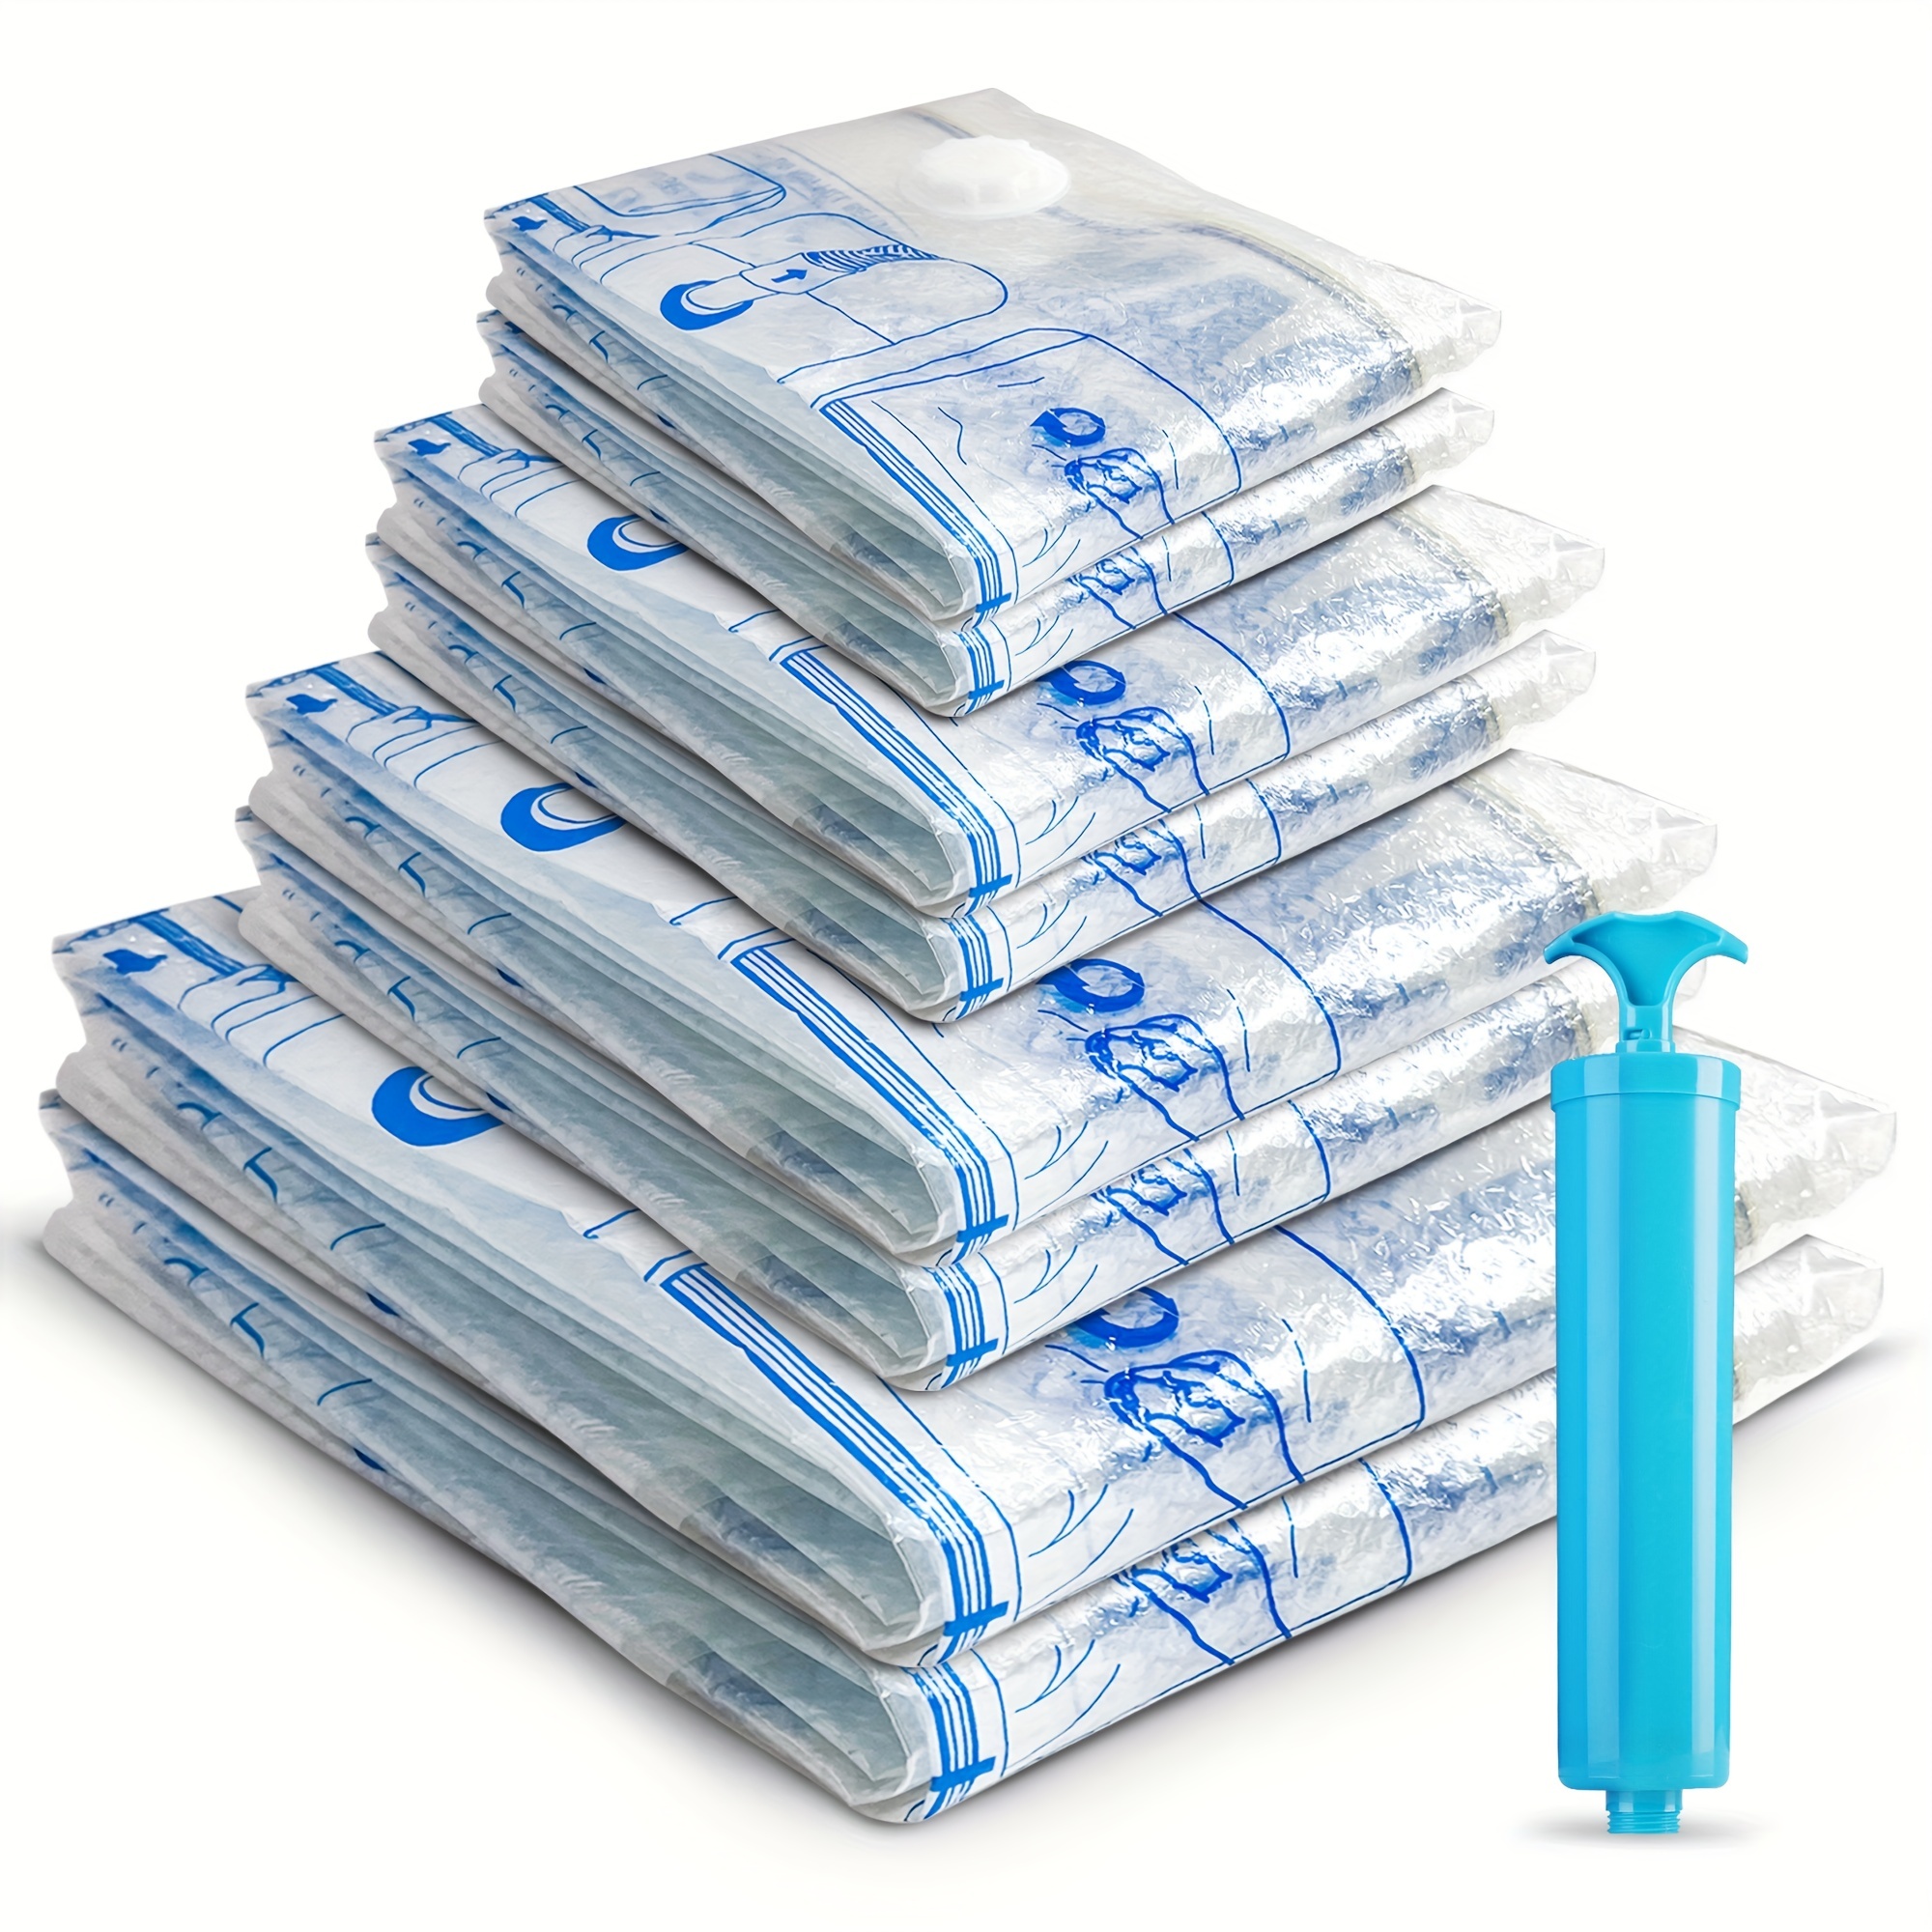 Premium Vacuum Storage Seal Bags for Comforter Blanket Bedding  Clothing(1-10pcs)